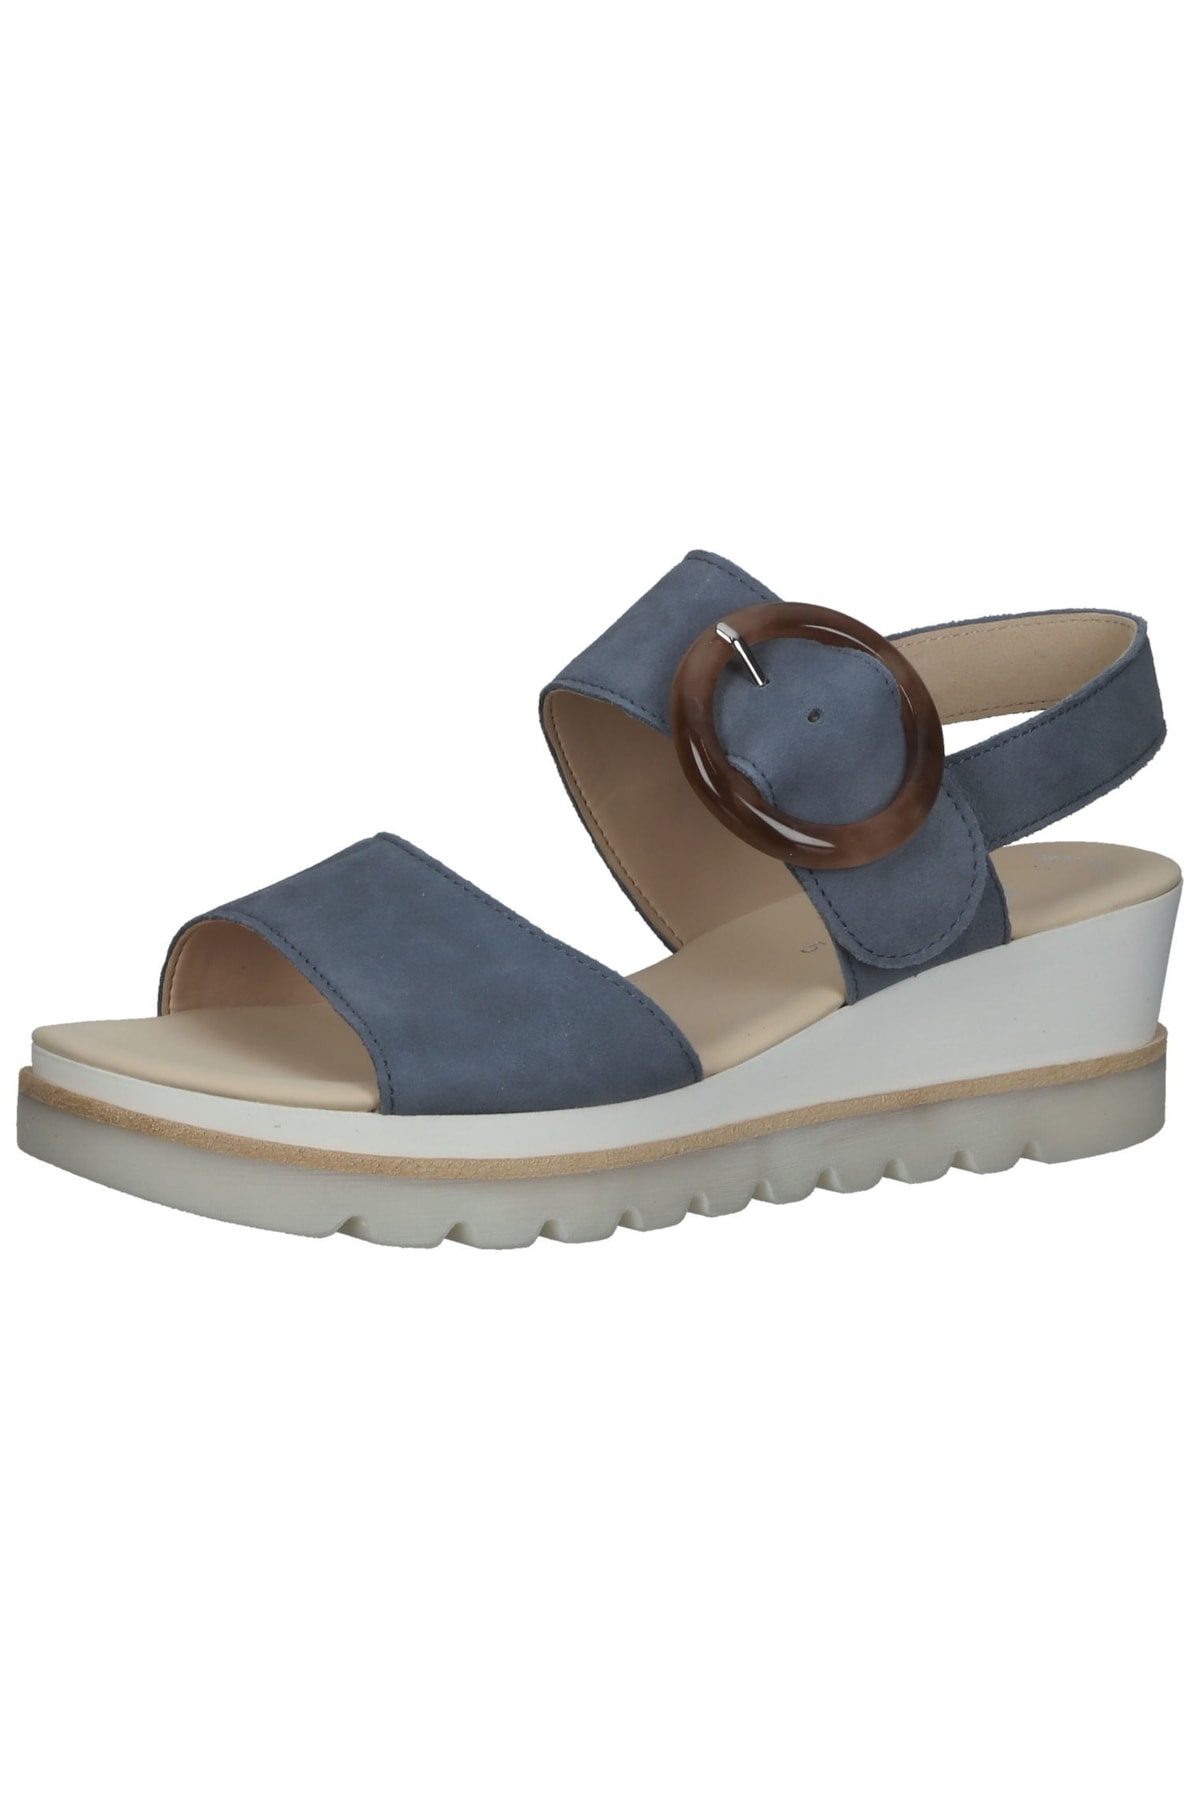 GABOR Sandalette Blau Keilabsatz Fast ausverkauft